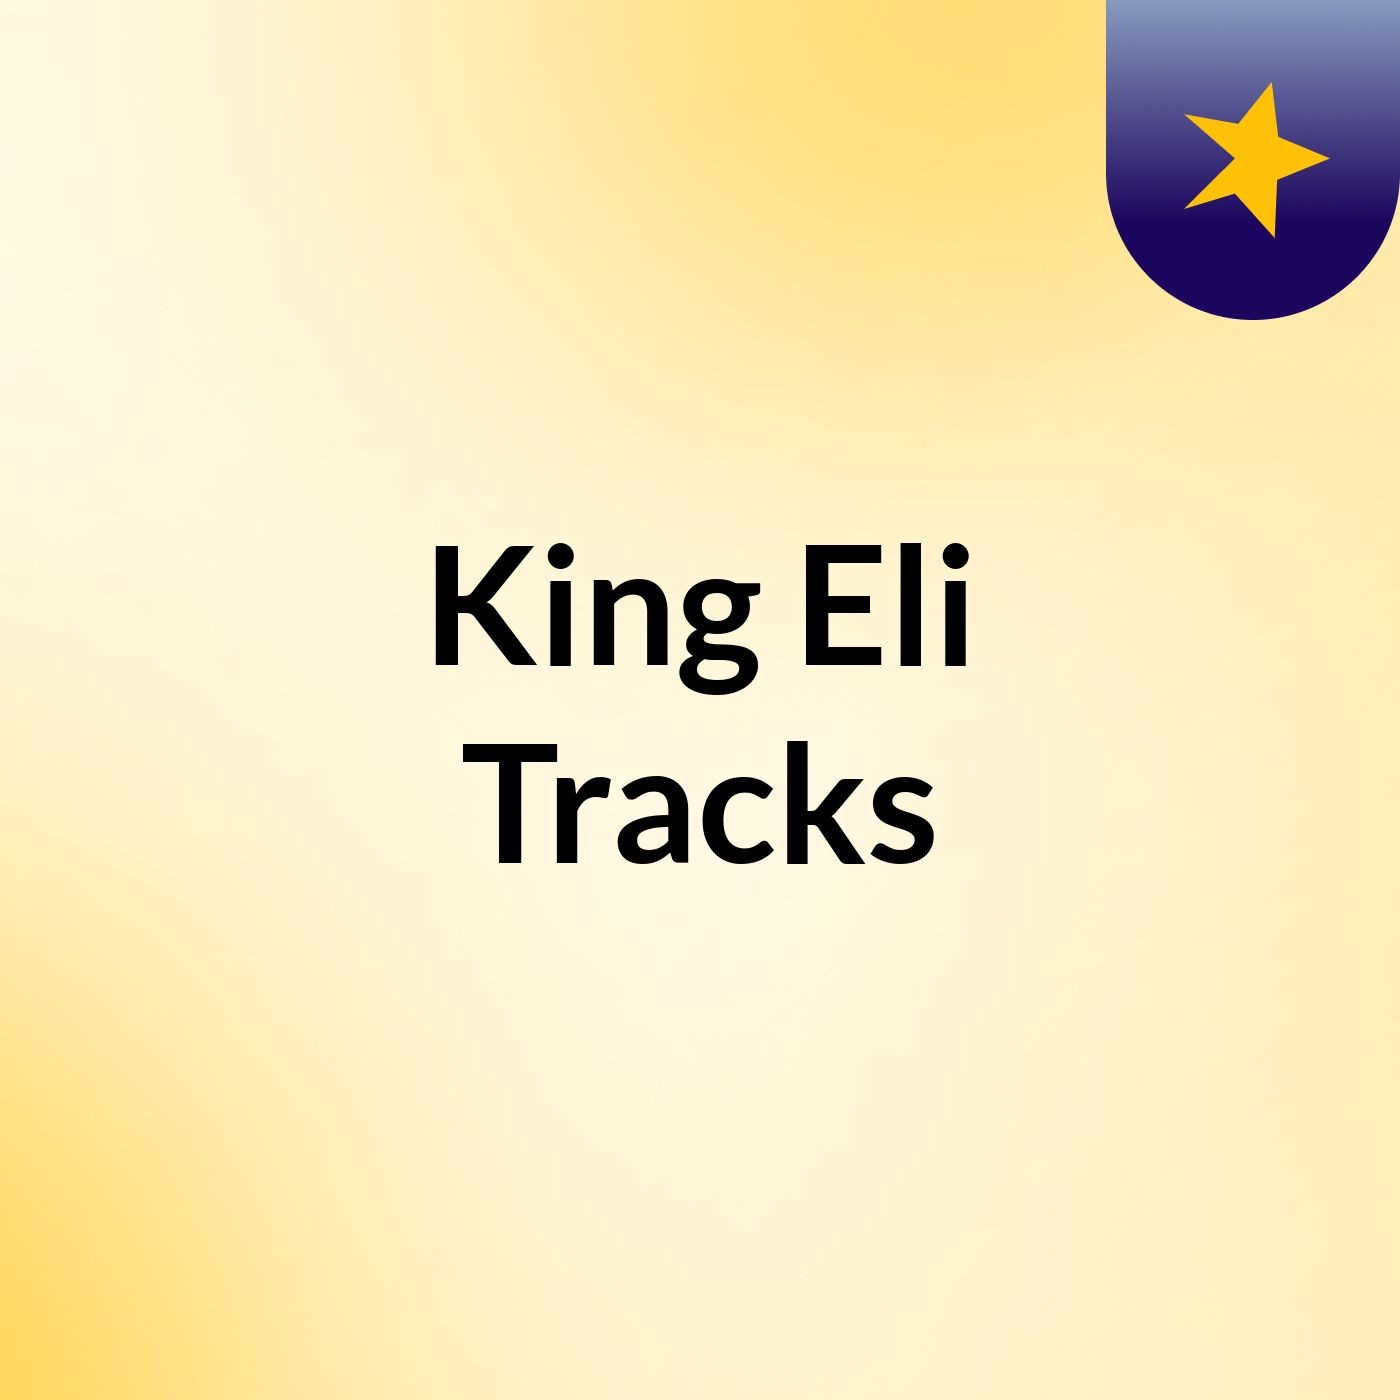 King Eli Tracks